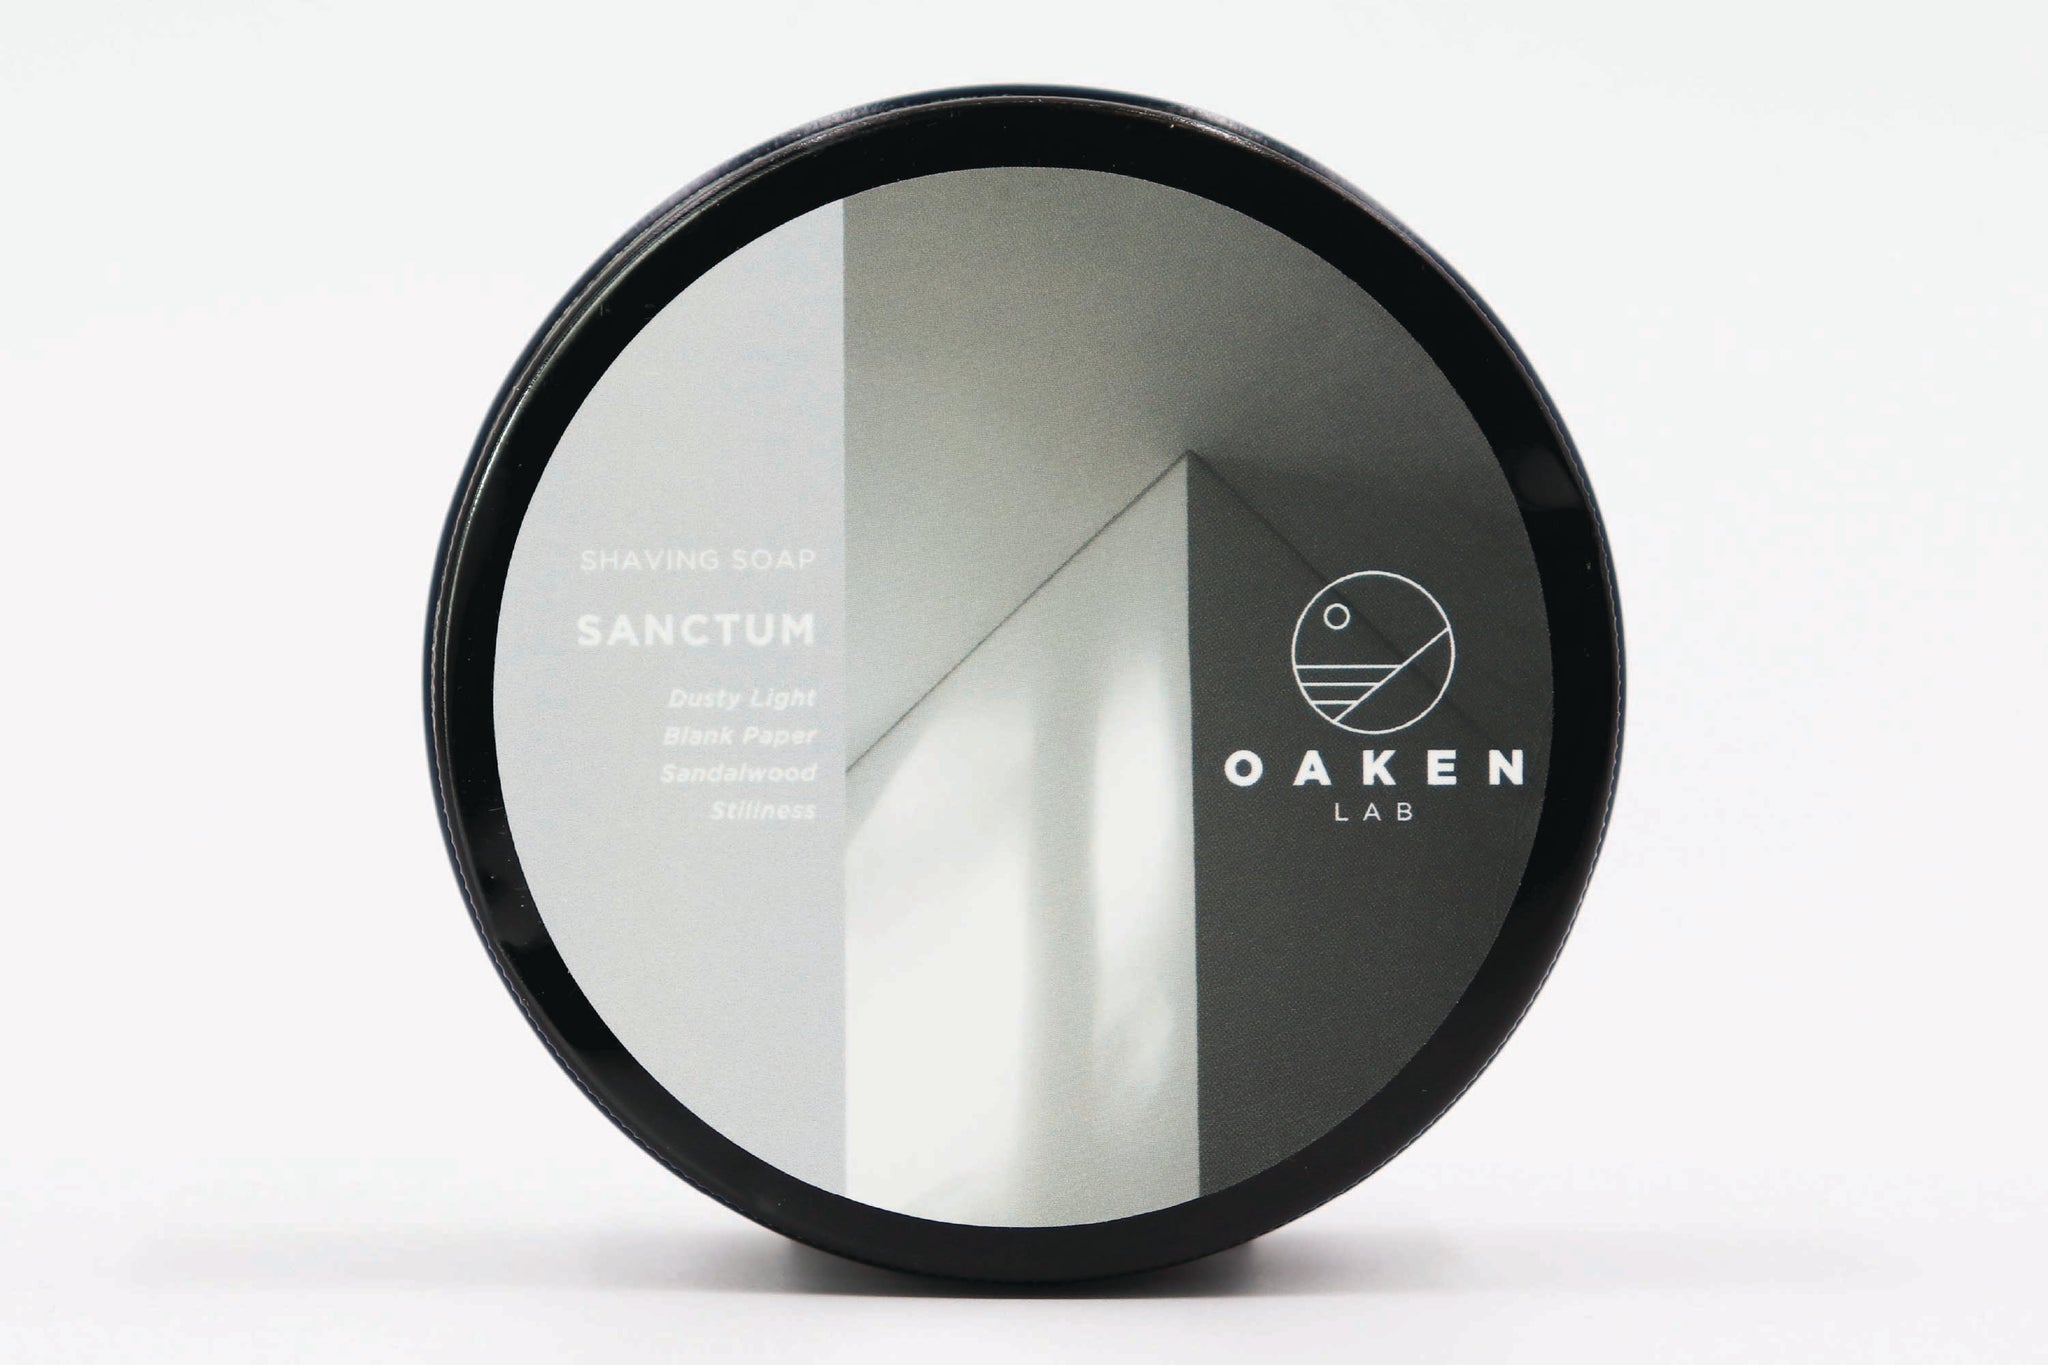 Oaken Lab 'Sanctum' Luxury Shaving Soap